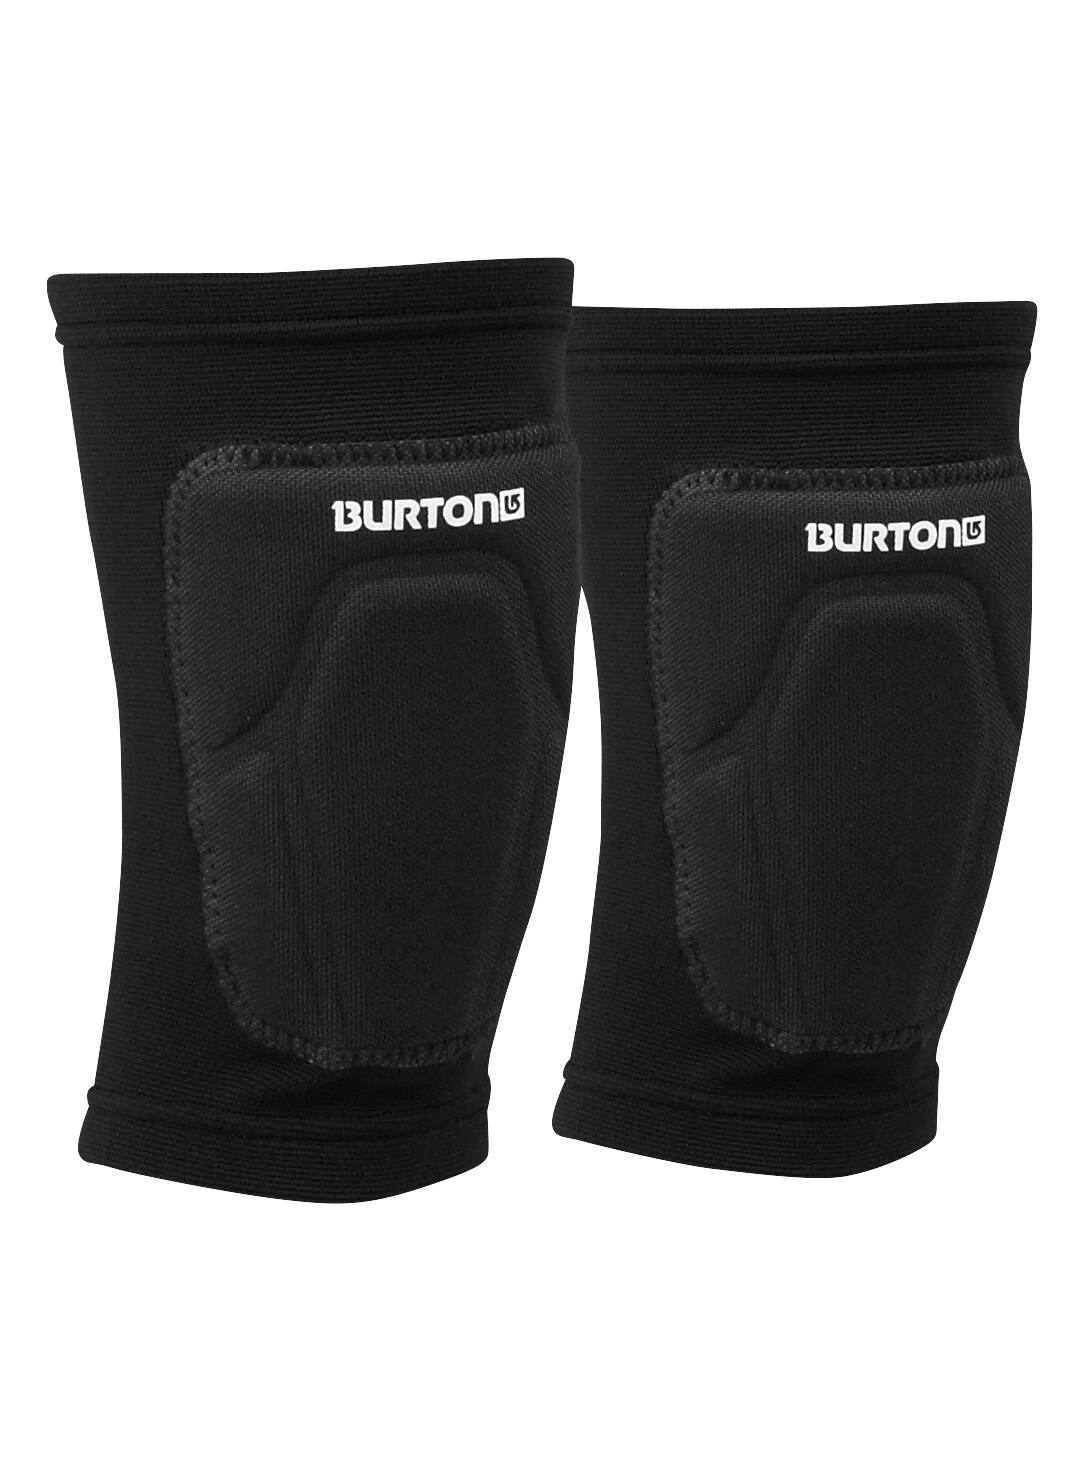 Burton Basic Knee Pad | Burton.com Winter 2022 US